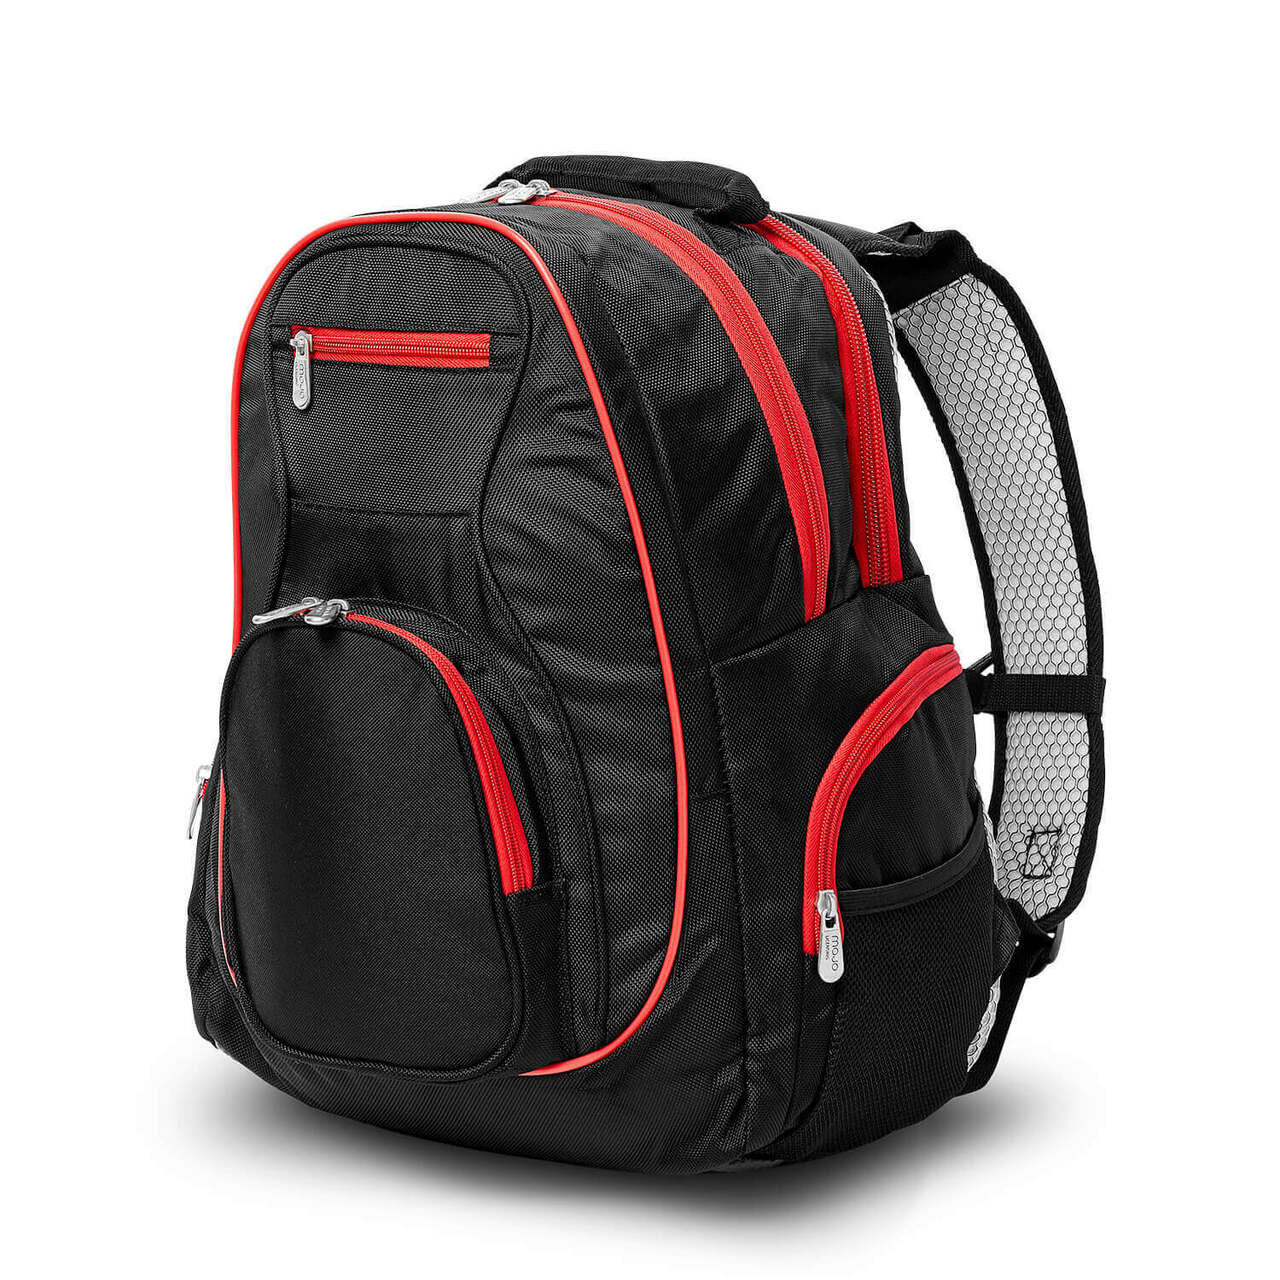 Atlanta Hawks 2 Piece Premium Colored Trim Backpack and Luggage Set